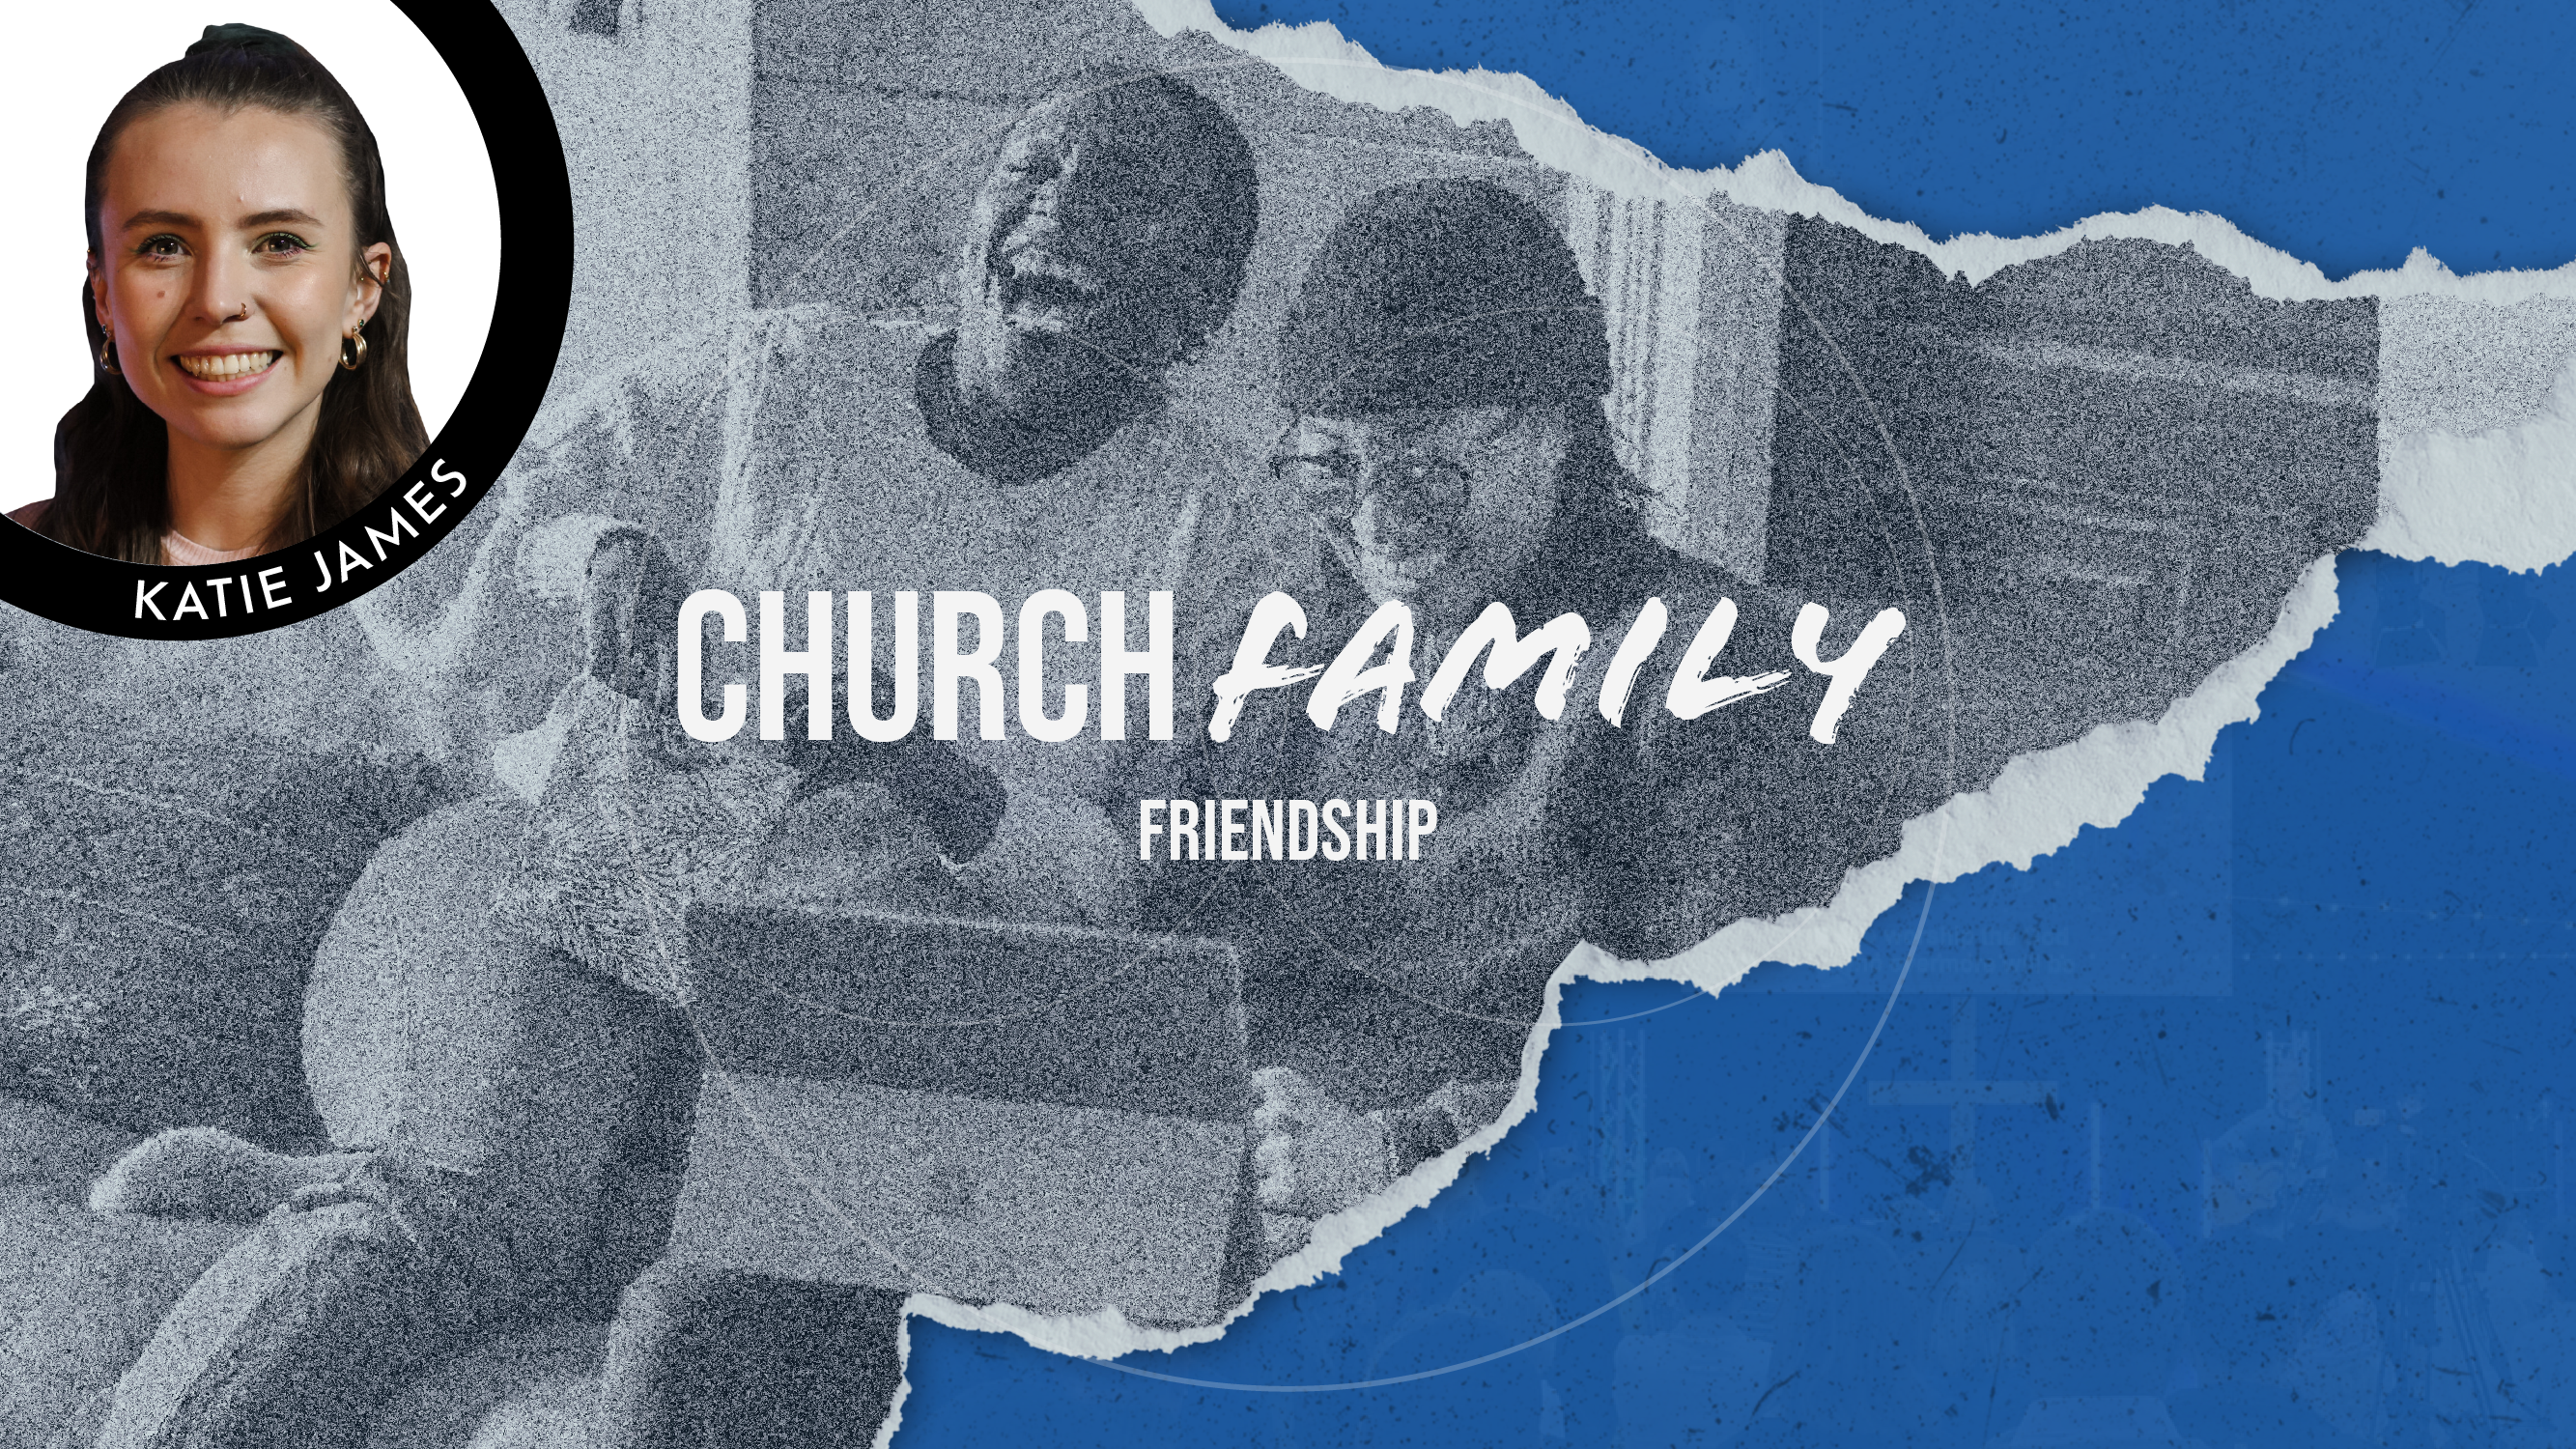 Church Family - Youtube Slide - FRIENDSHIP-05 YOUTUBE.png